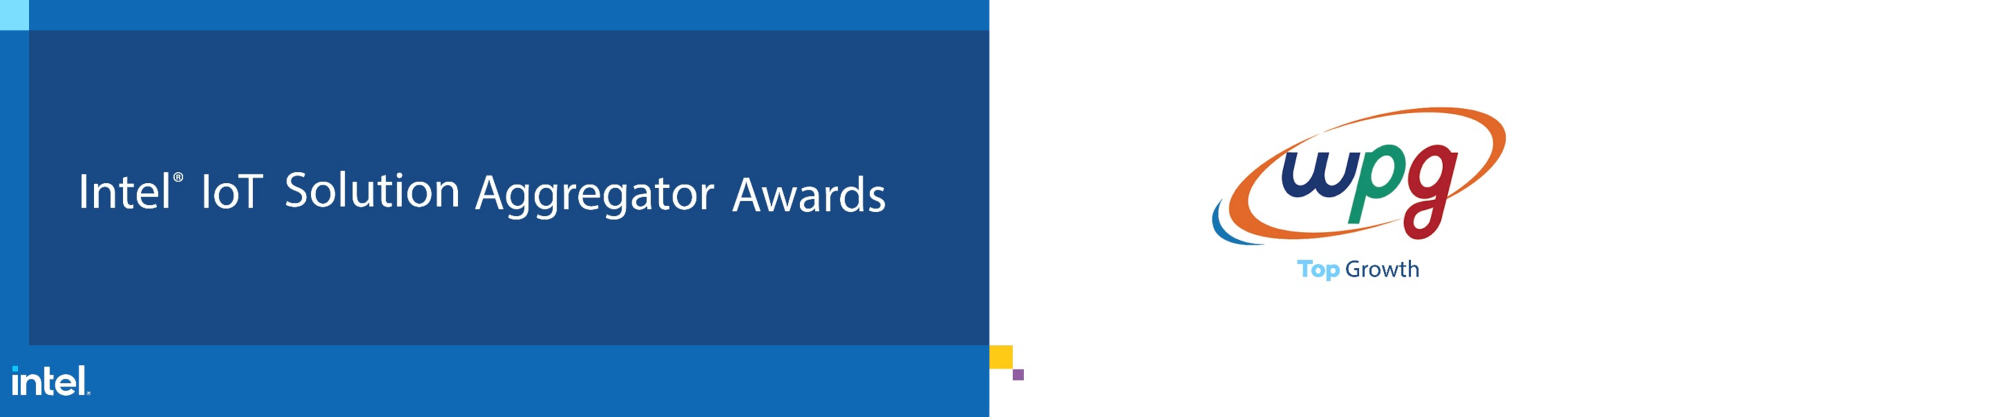 WPG 榮獲英特爾物聯網解決方案聚合商獲得最佳成長獎！